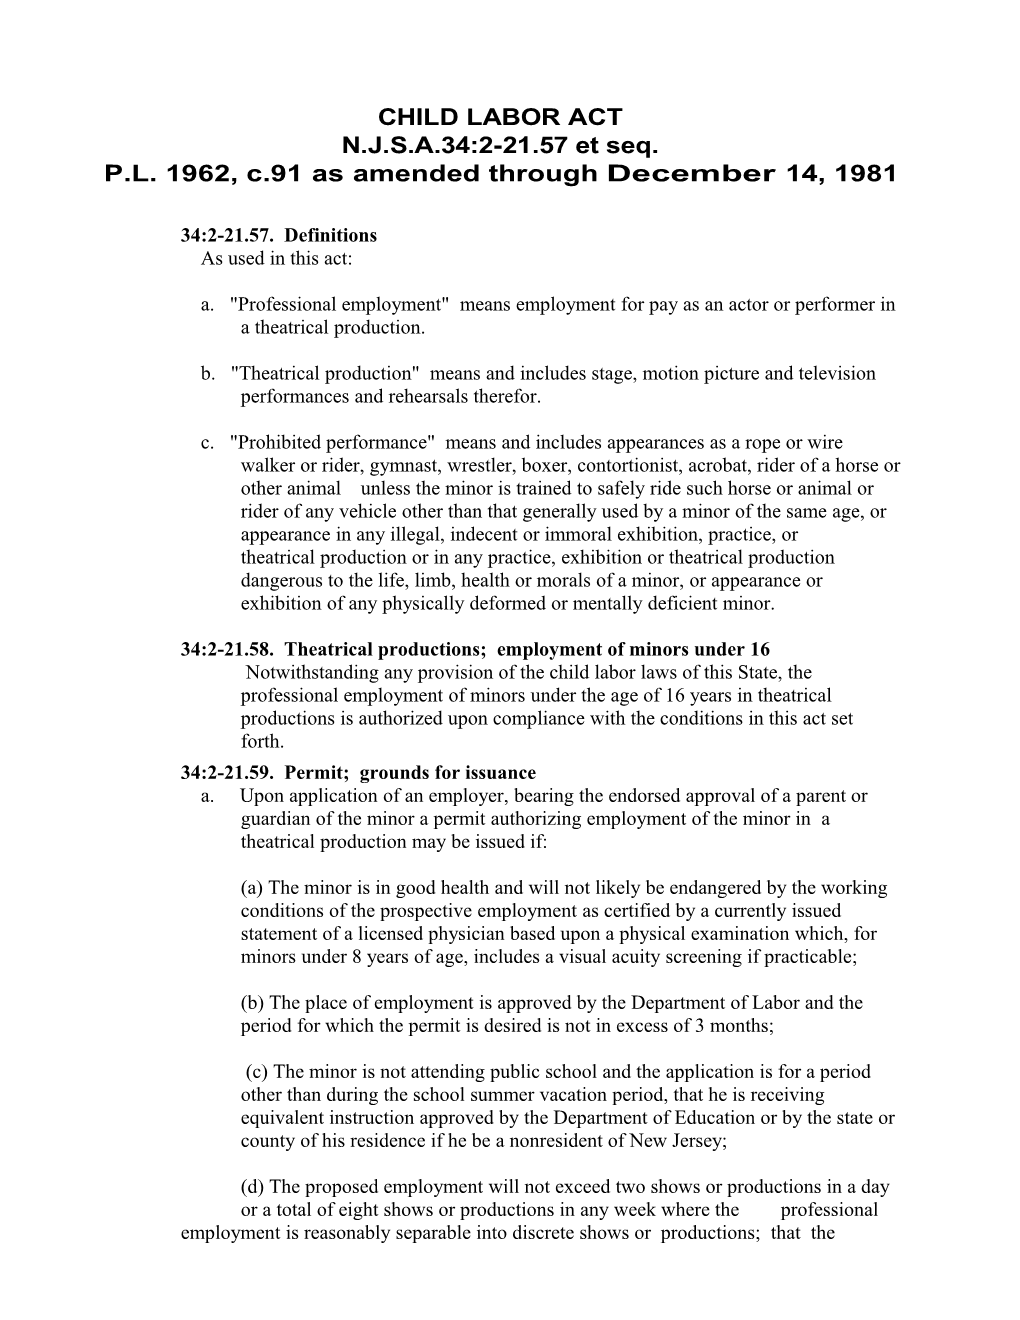 P.L. 1962, C.91 As Amended Through December 14, 1981